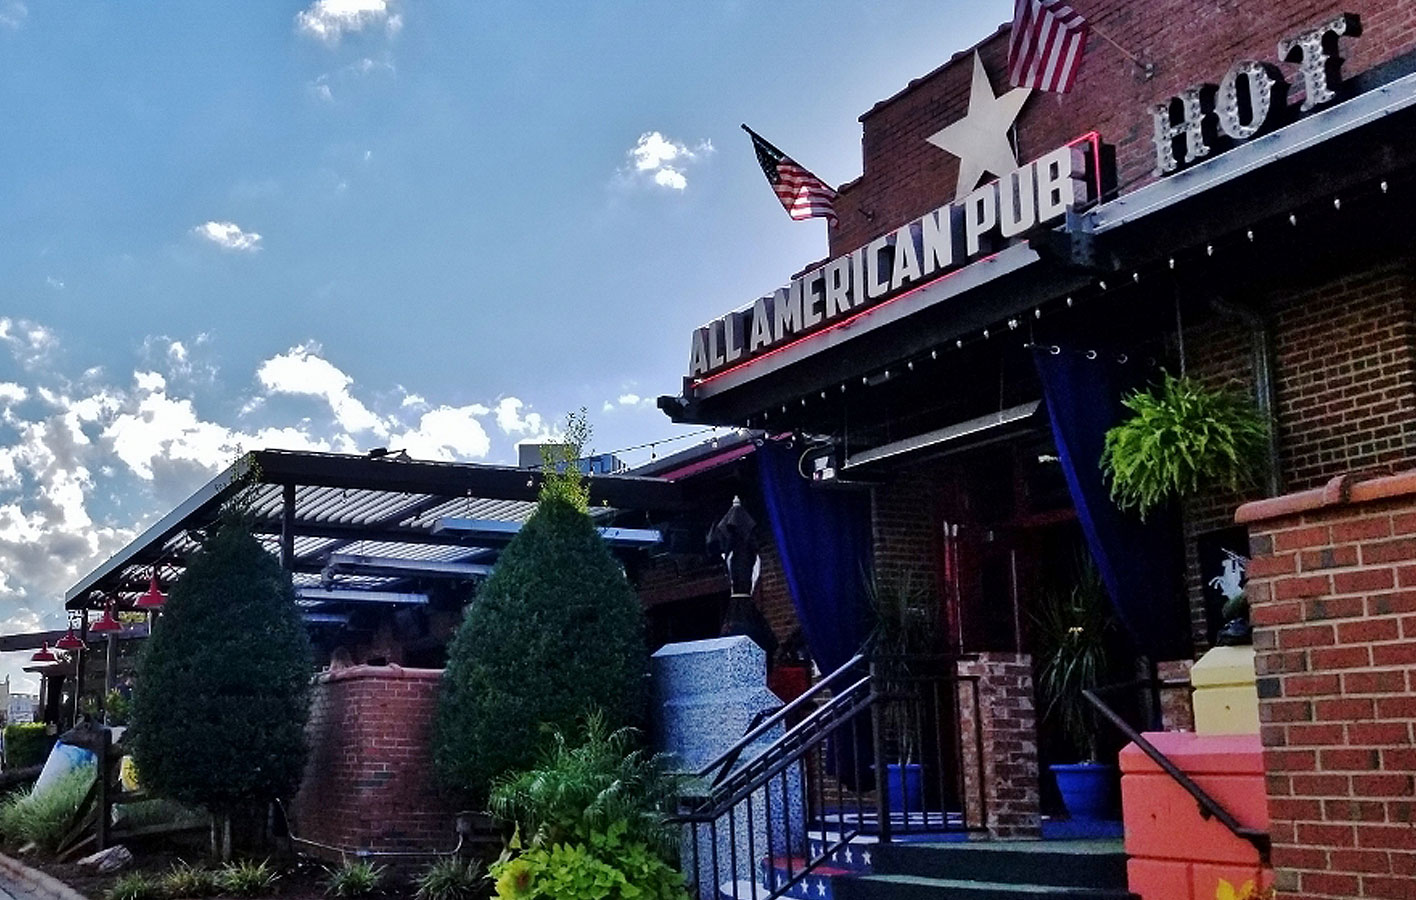 All American Pub Photo